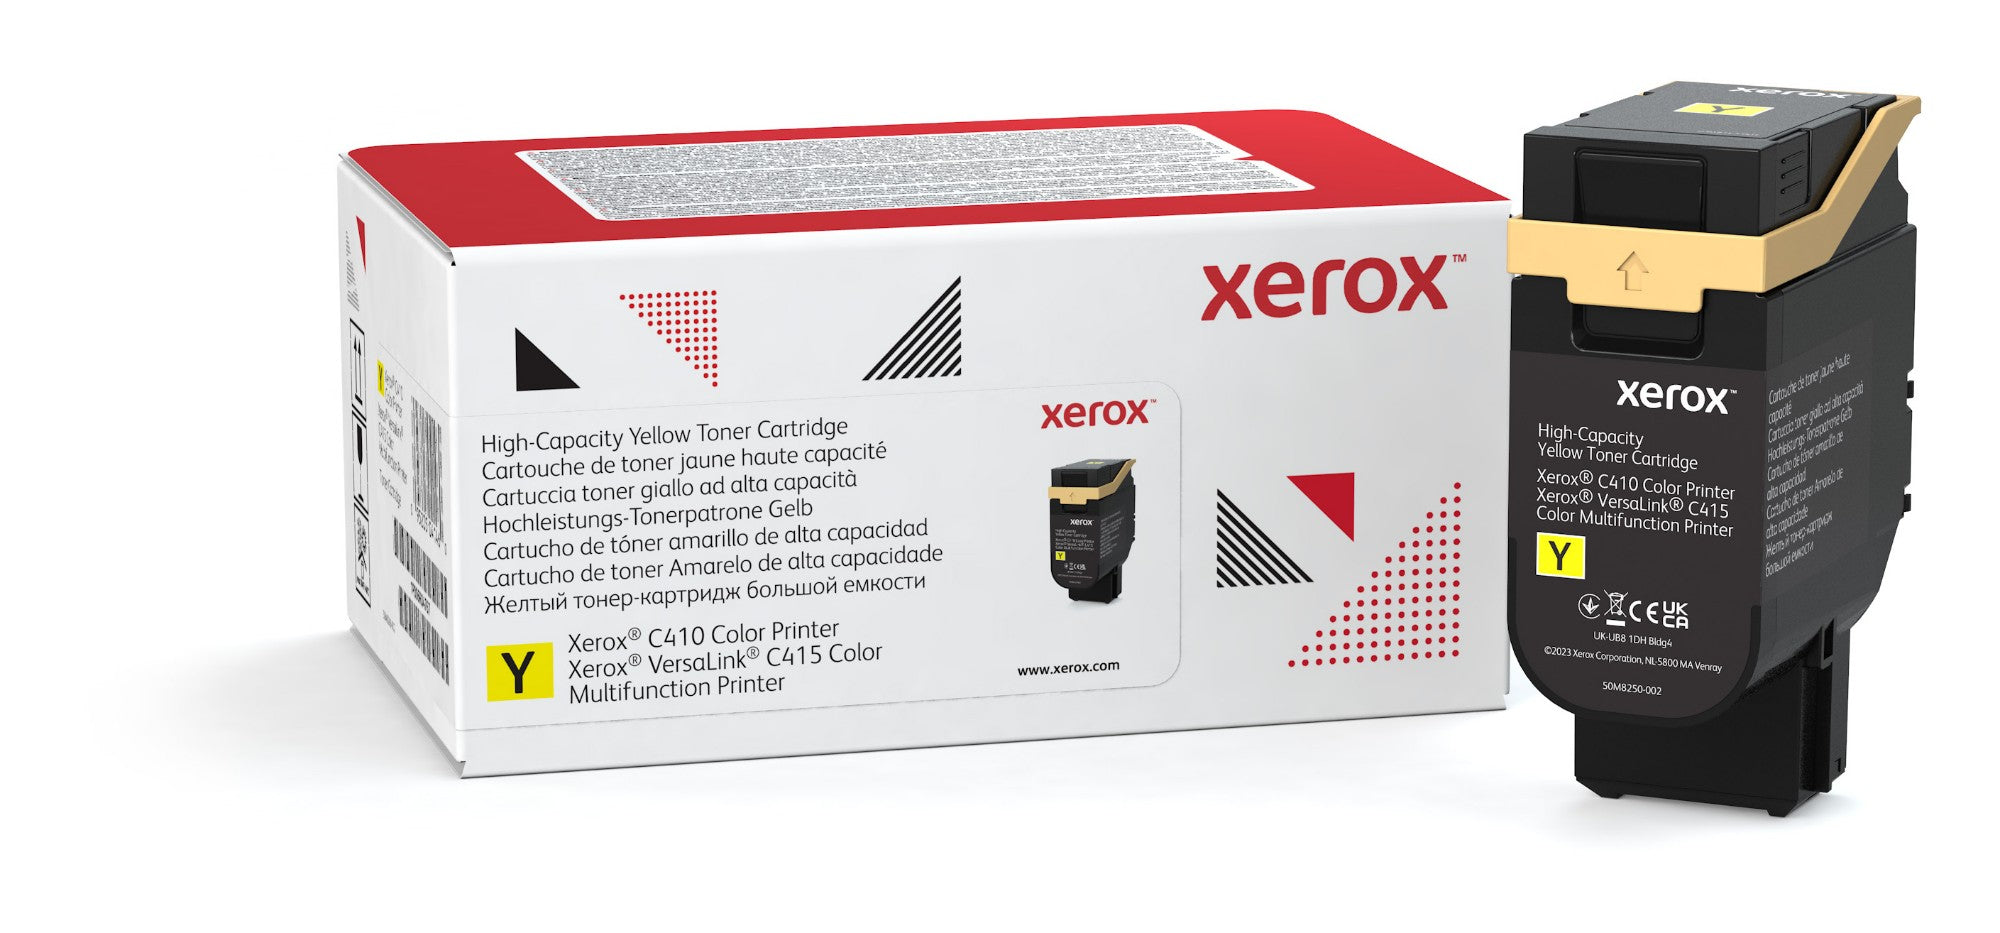 Xerox 006R04688 Toner-kit yellow high-capacity, 7K pages ISO/IEC 19752 for Xerox VersaLink C 410